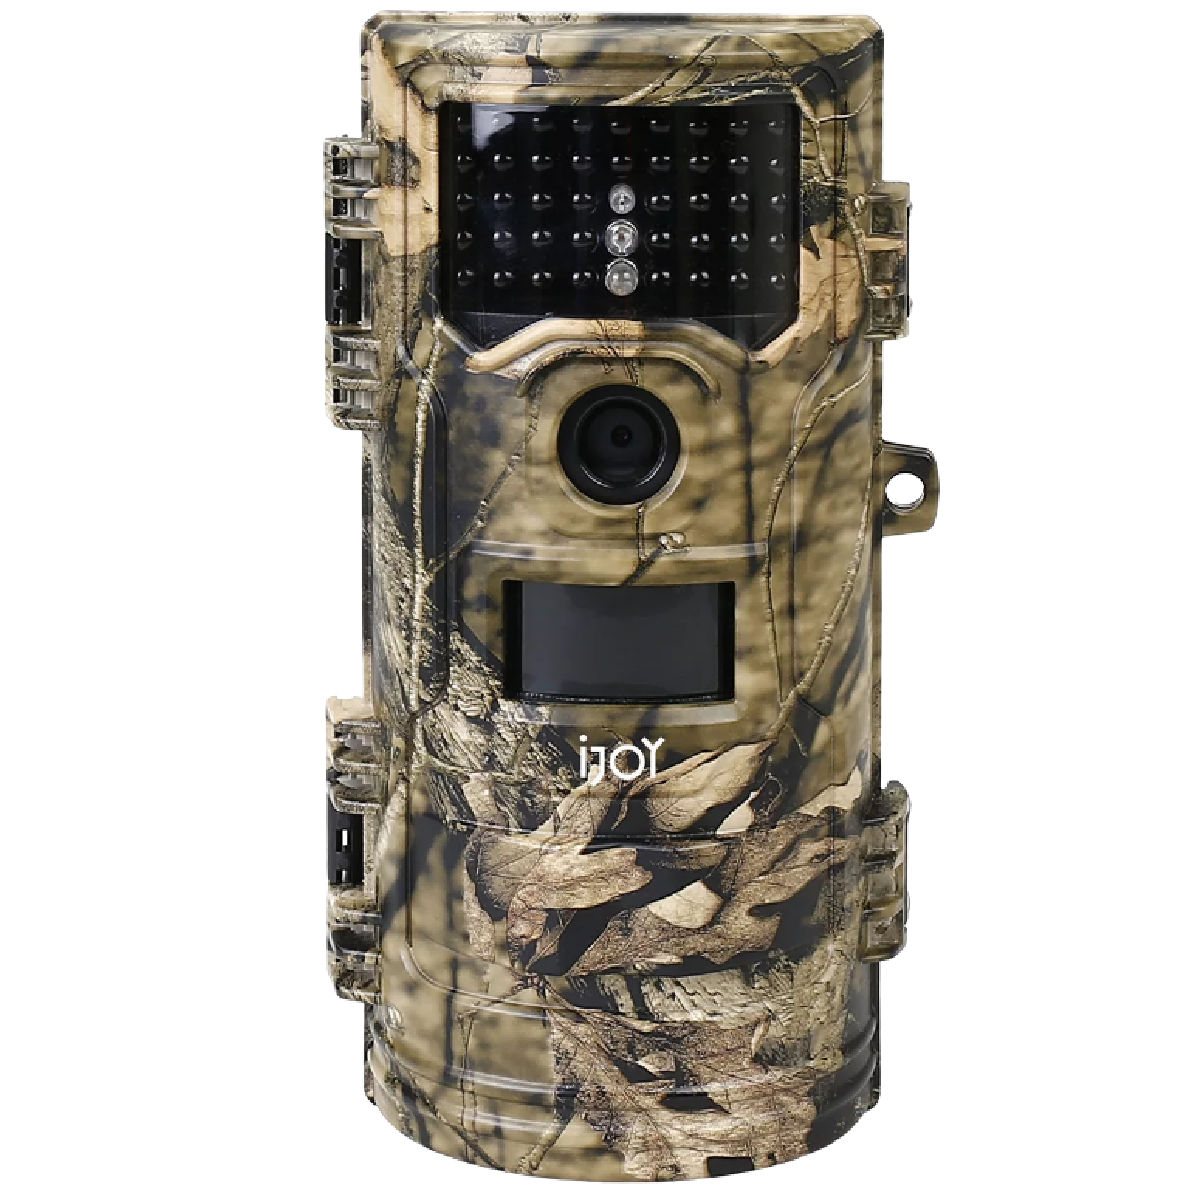 iJoy Wild Force Hunting & Trail Sensor Camera